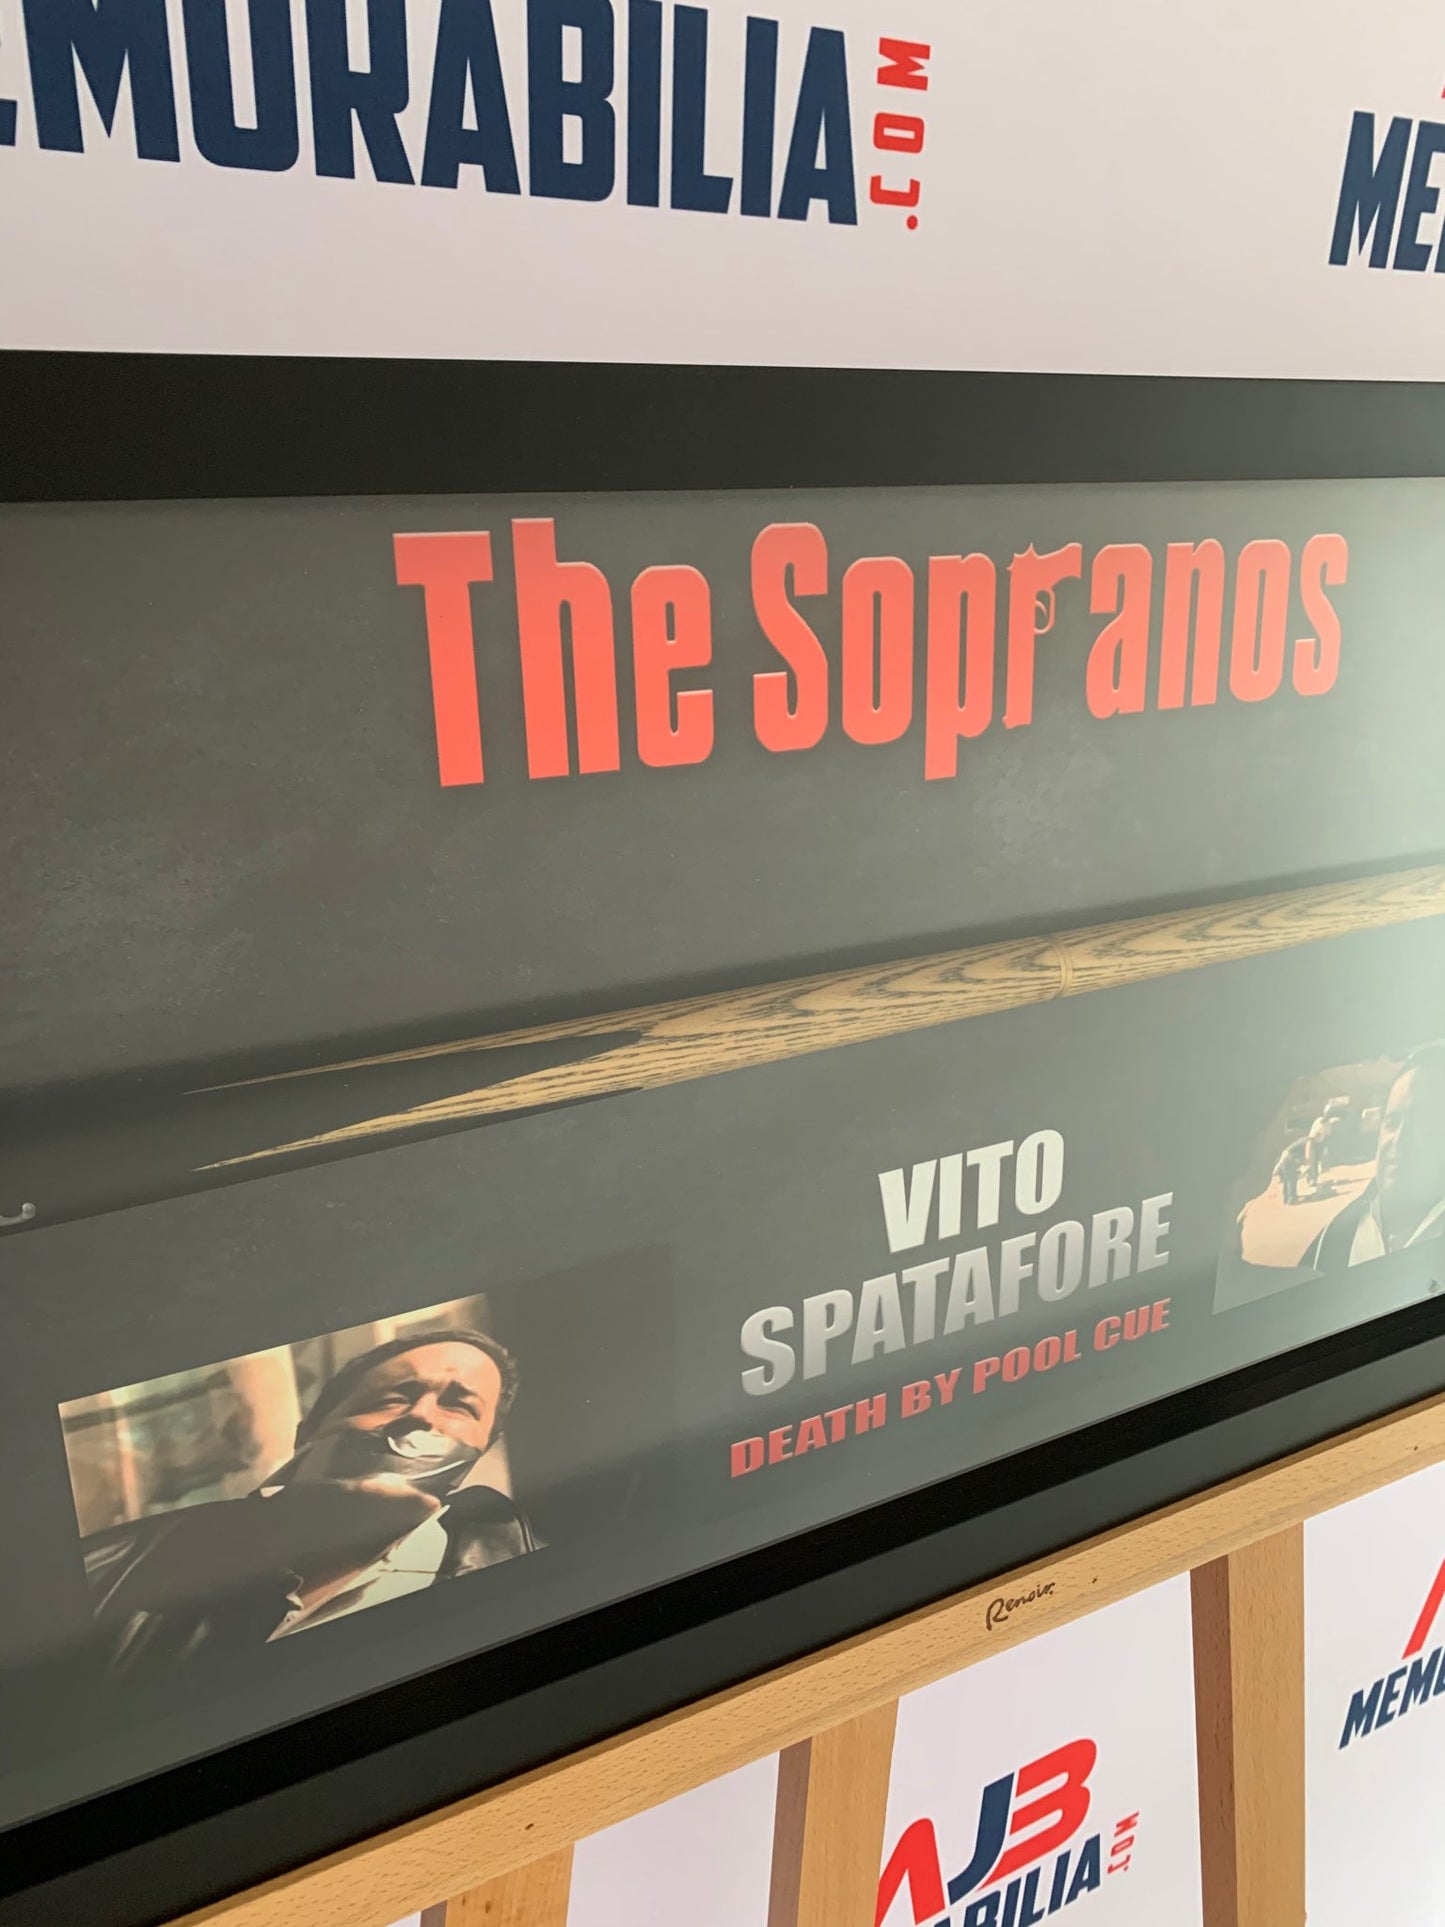 Limited Edition Signed Joseph Gannascoli “VITO” Pool Cue The Sopranos